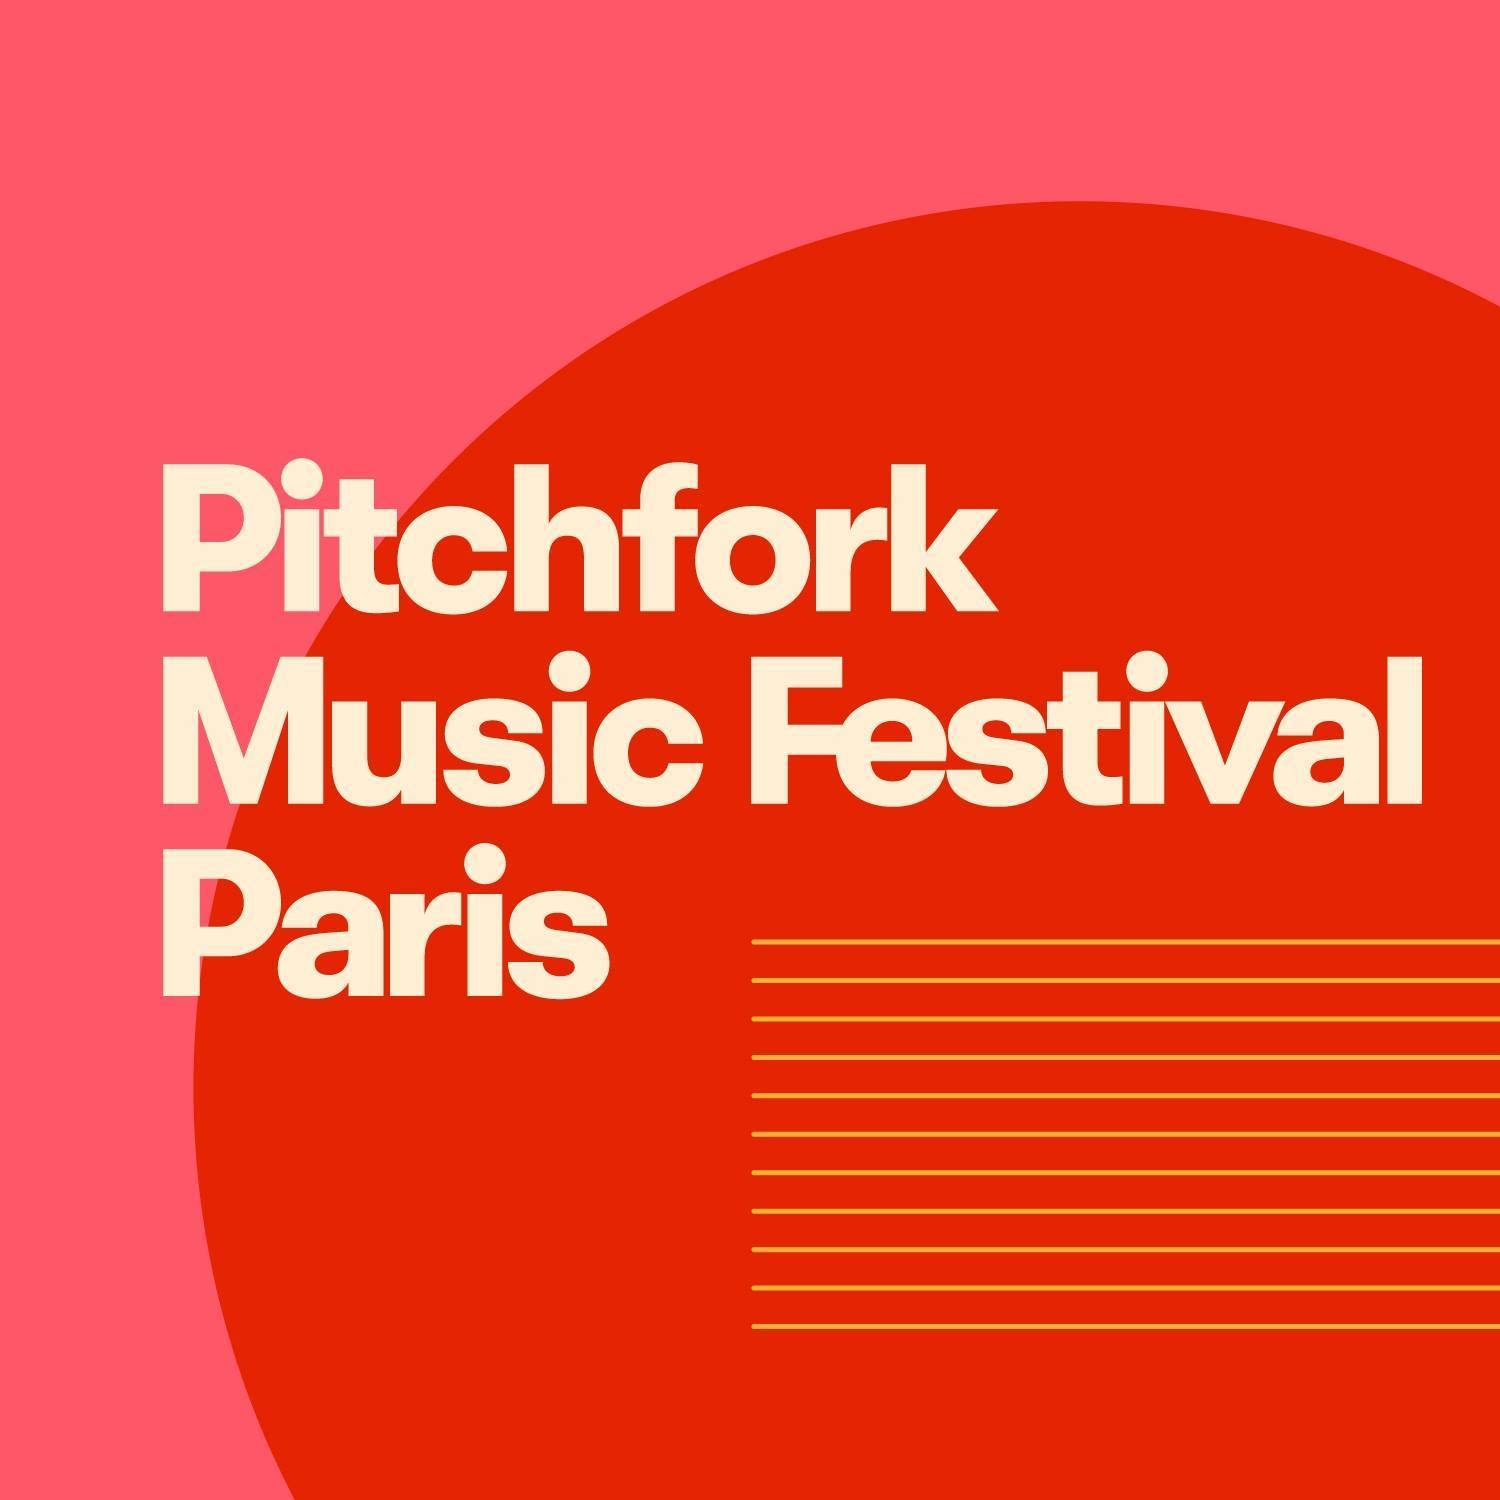 Pitchfork Music Festival Paris 2019